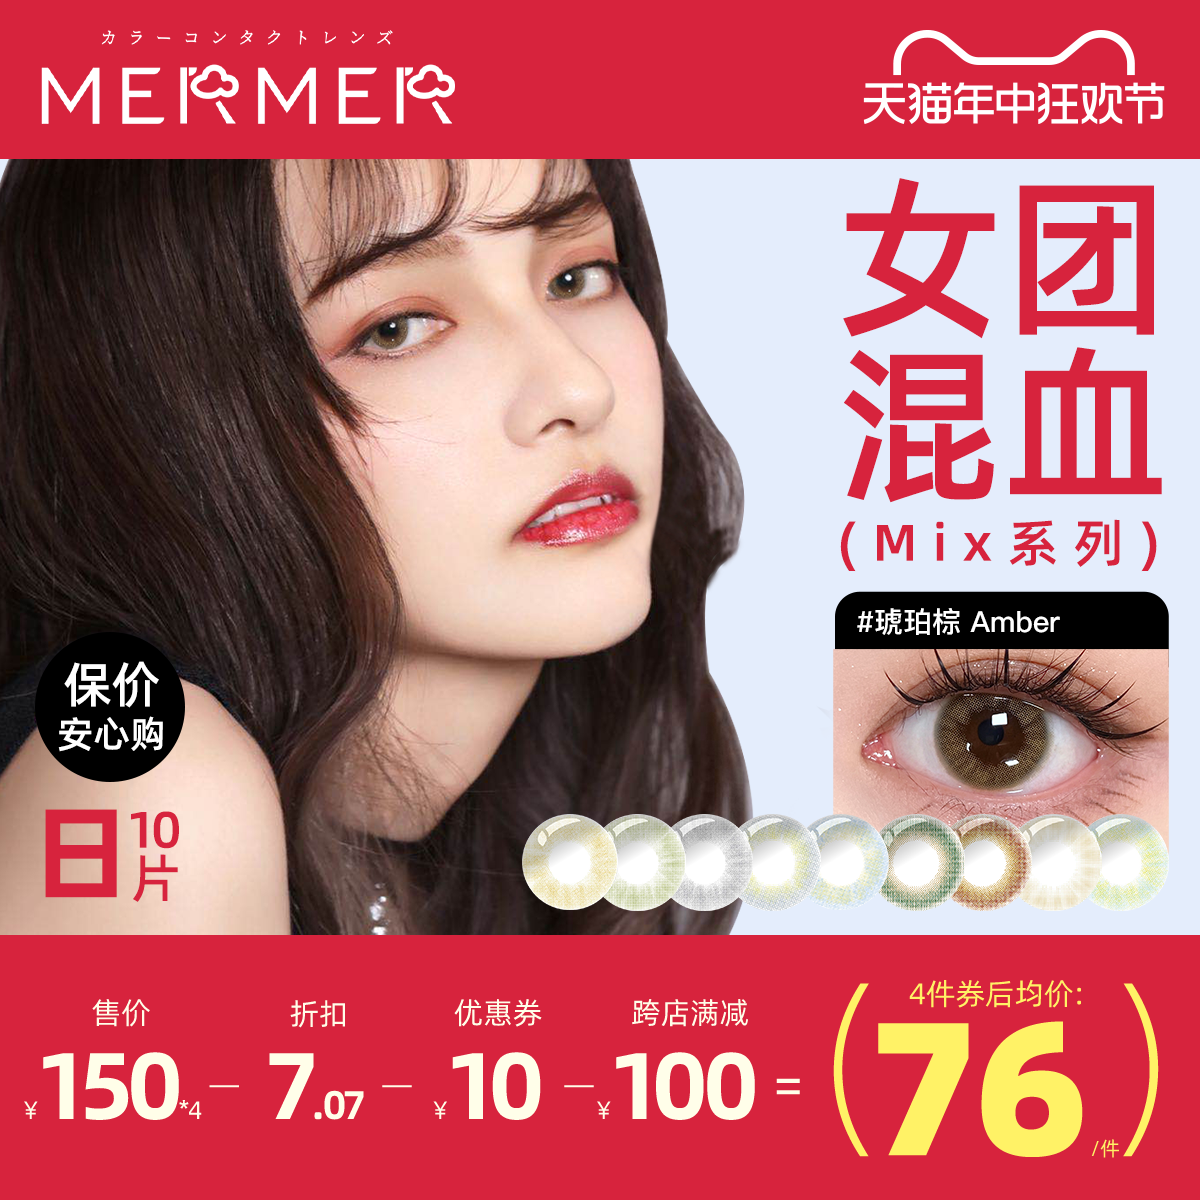 mermer进口美瞳日抛10片 Mix女团同款混血小直径跨境彩色隐形眼镜